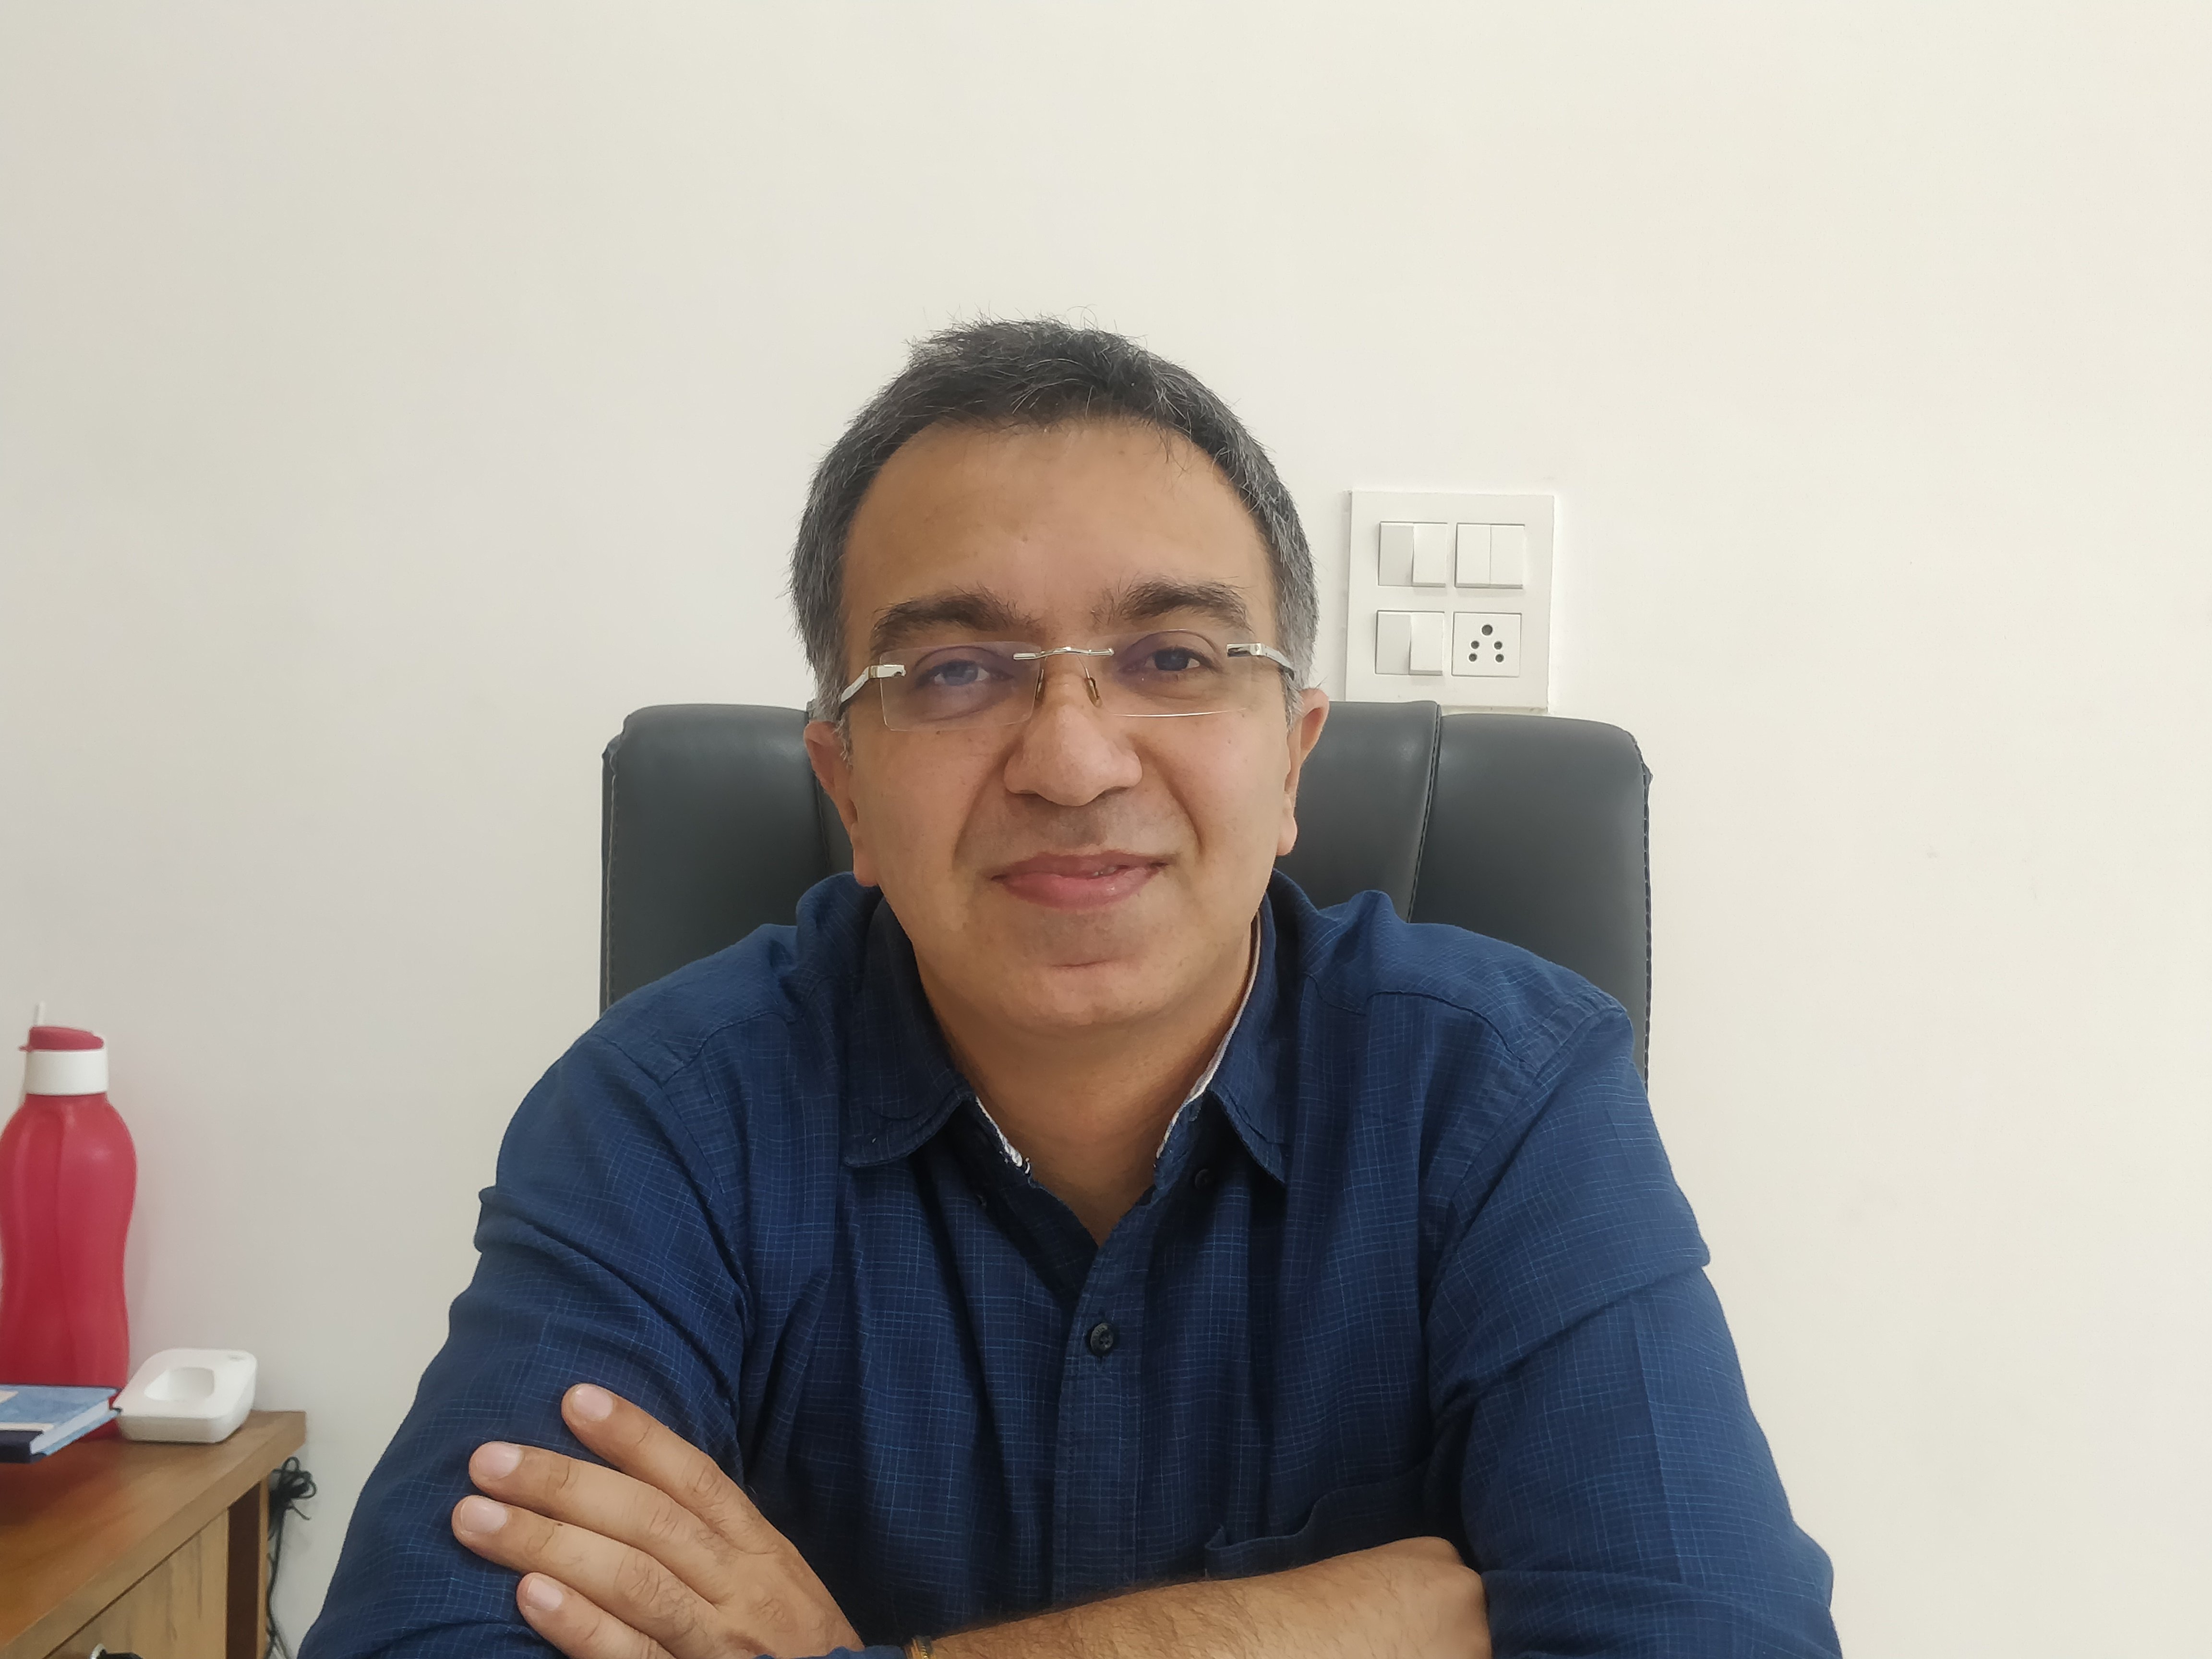 Dr. Aman Bhatia